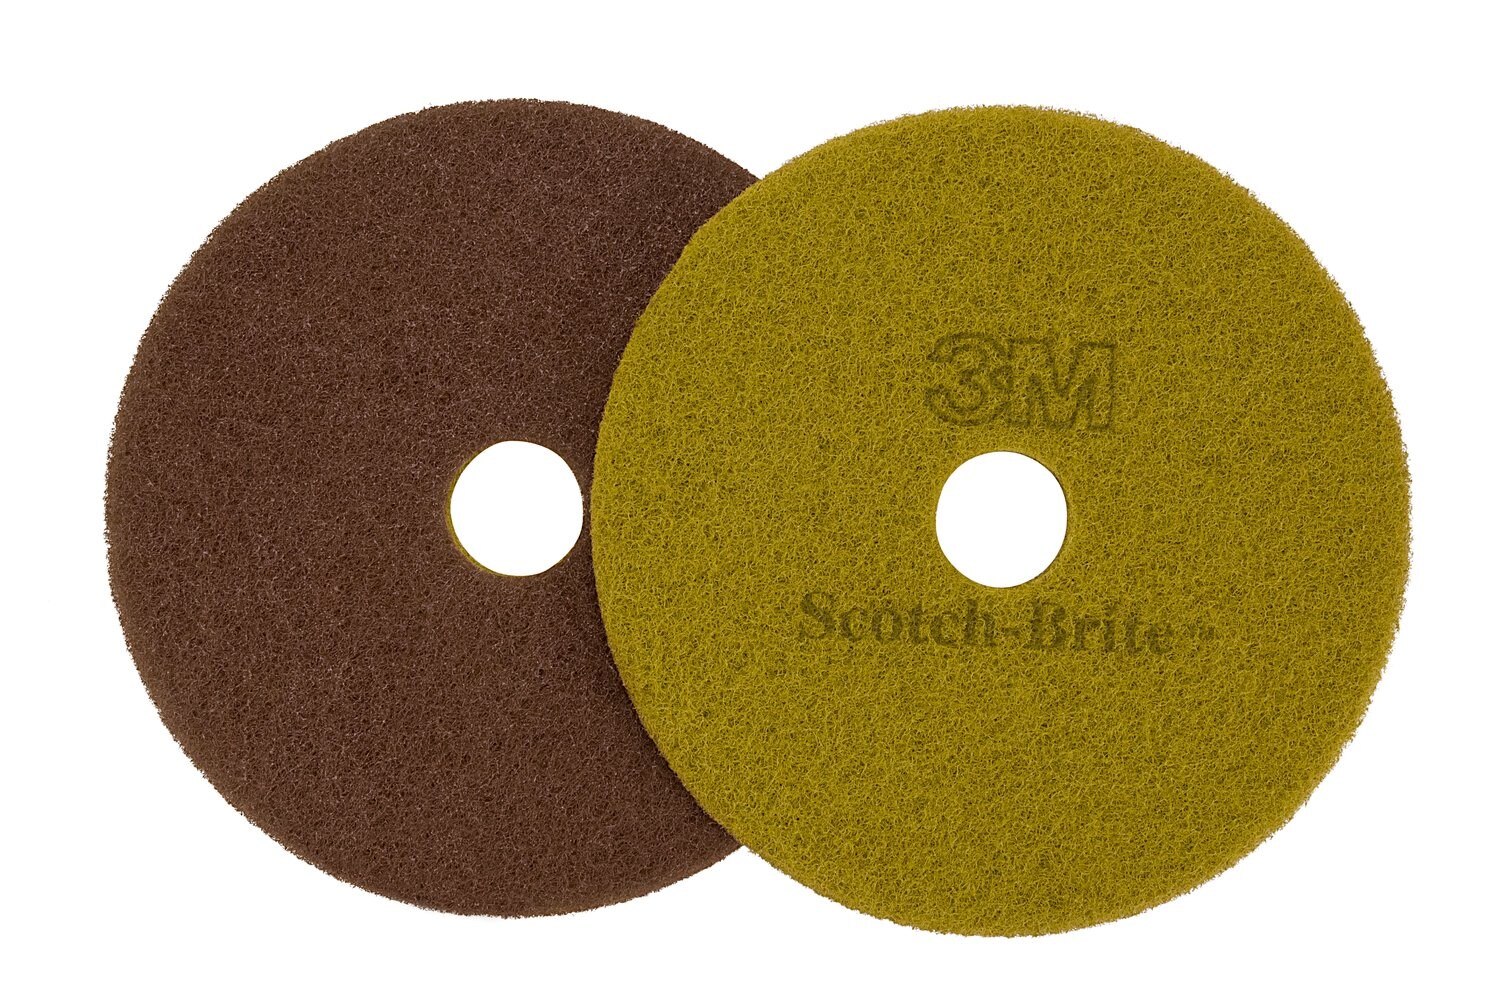 7100200177 - Scotch-Brite Sienna Diamond Floor Pad Plus, 17 in, 5/Case